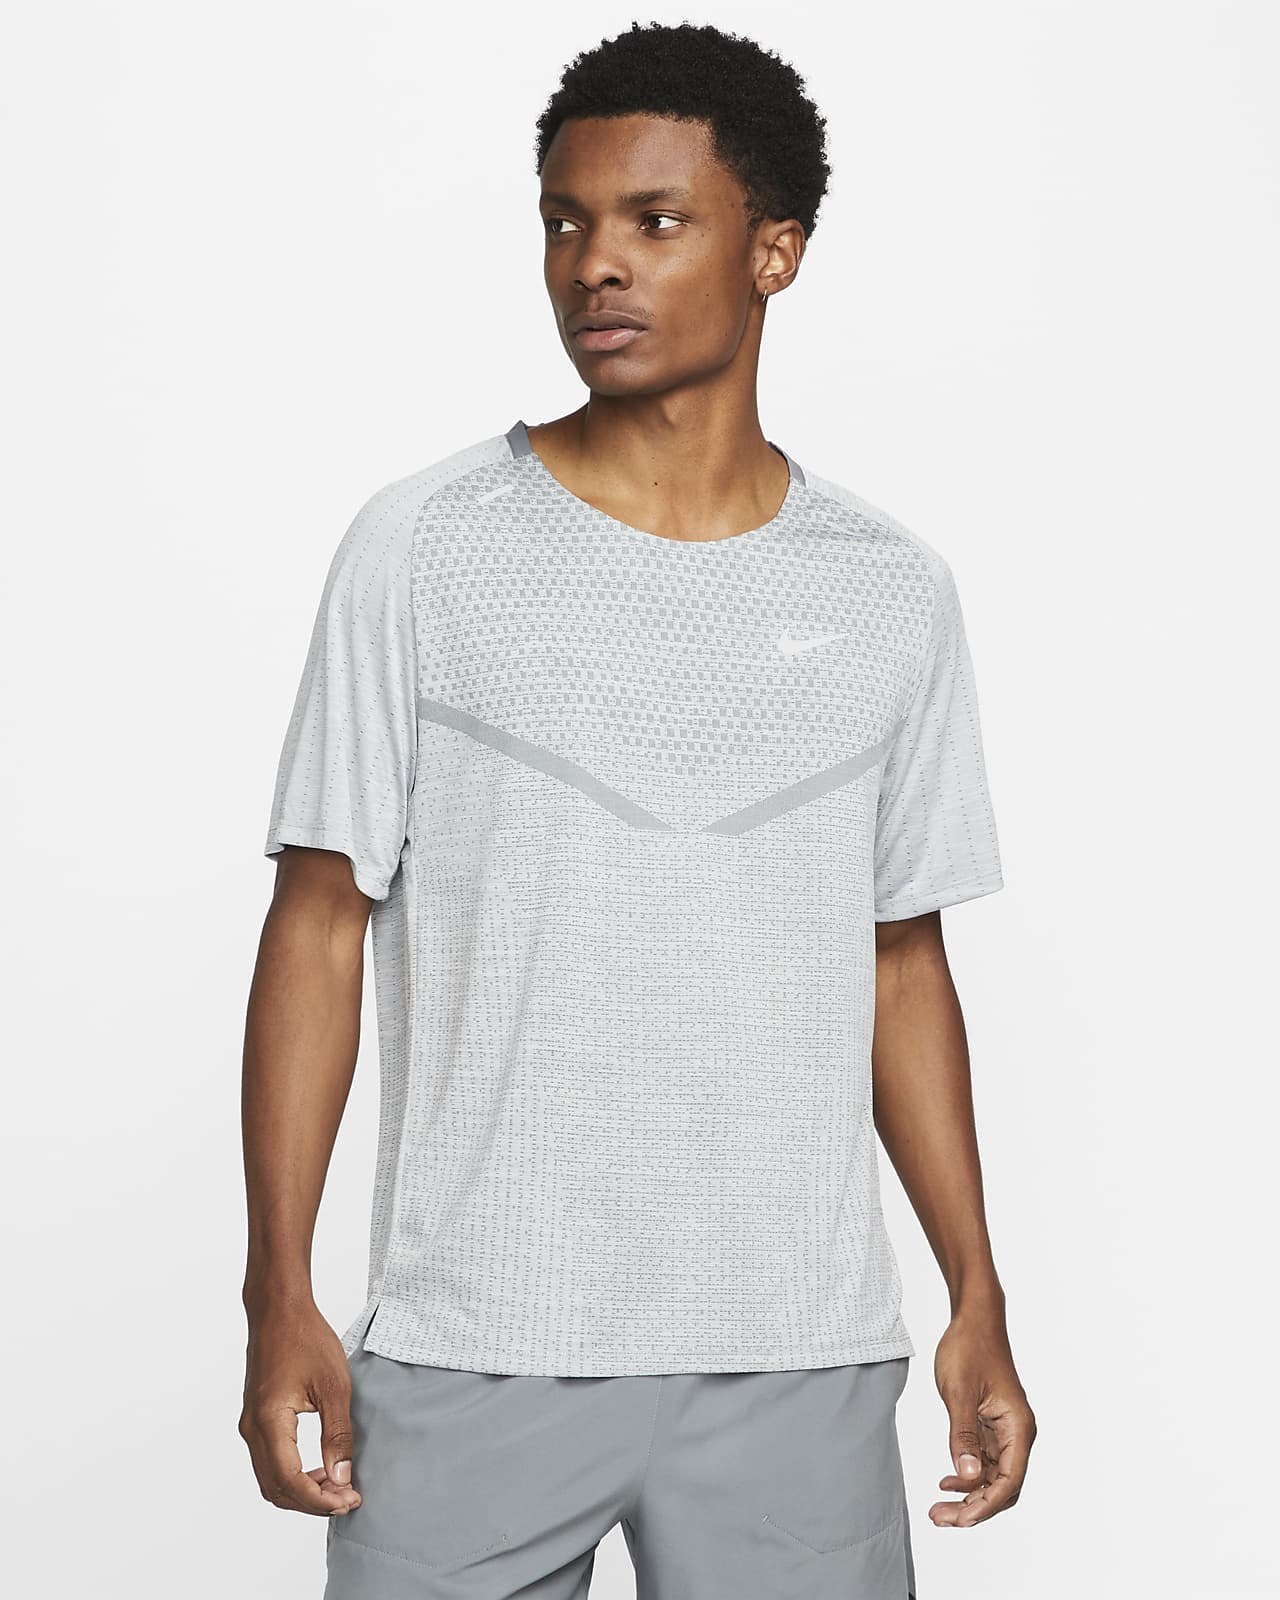 Nike TechKnit Men's Dri-FIT ADV Short-Sleeve Running Top